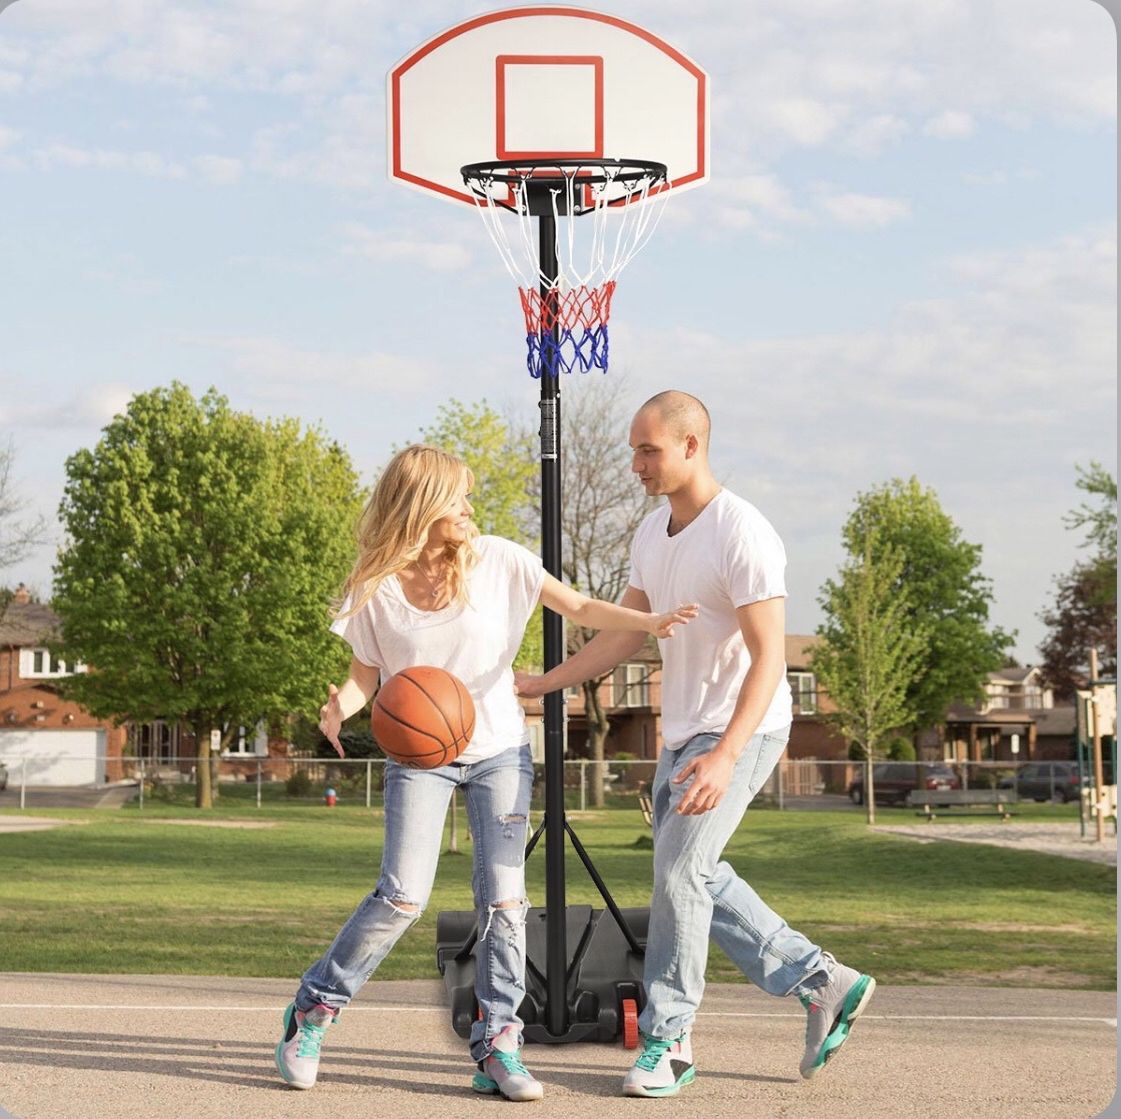 Brand New In Box Adjustable Basketball Hoop System Kid Indoor Outdoor Net Goal With Wheels